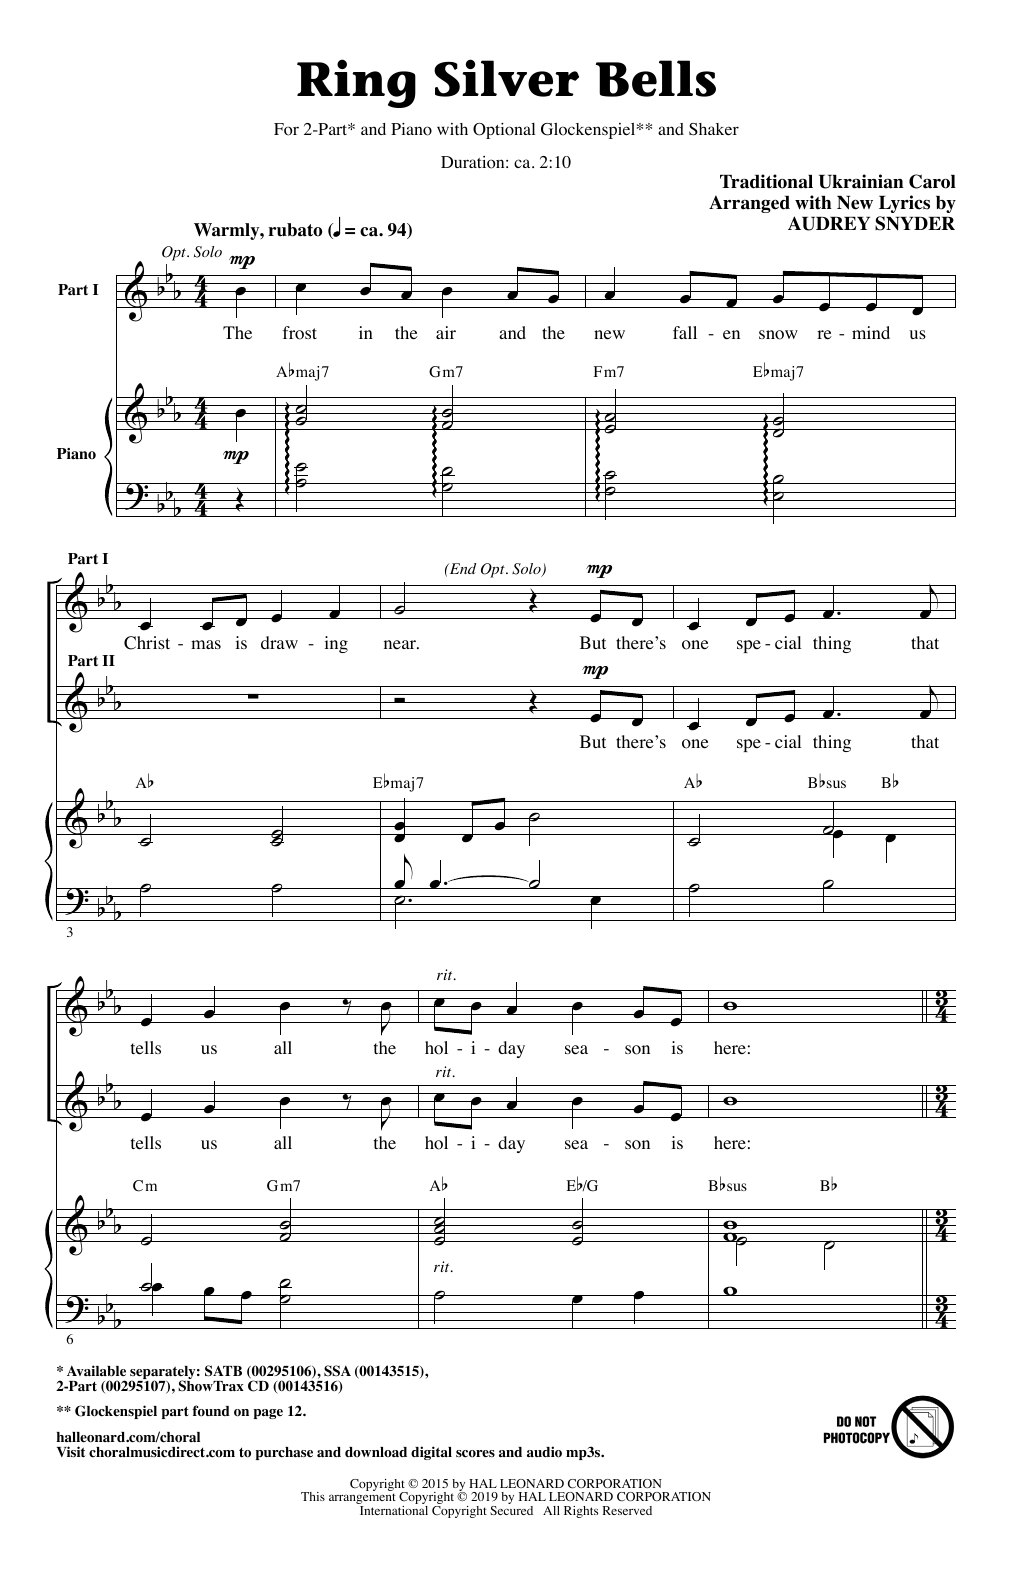 Traditional Ukrainian Carol Ring Silver Bells (arr. Audrey Snyder) Sheet Music Notes & Chords for SATB Choir - Download or Print PDF